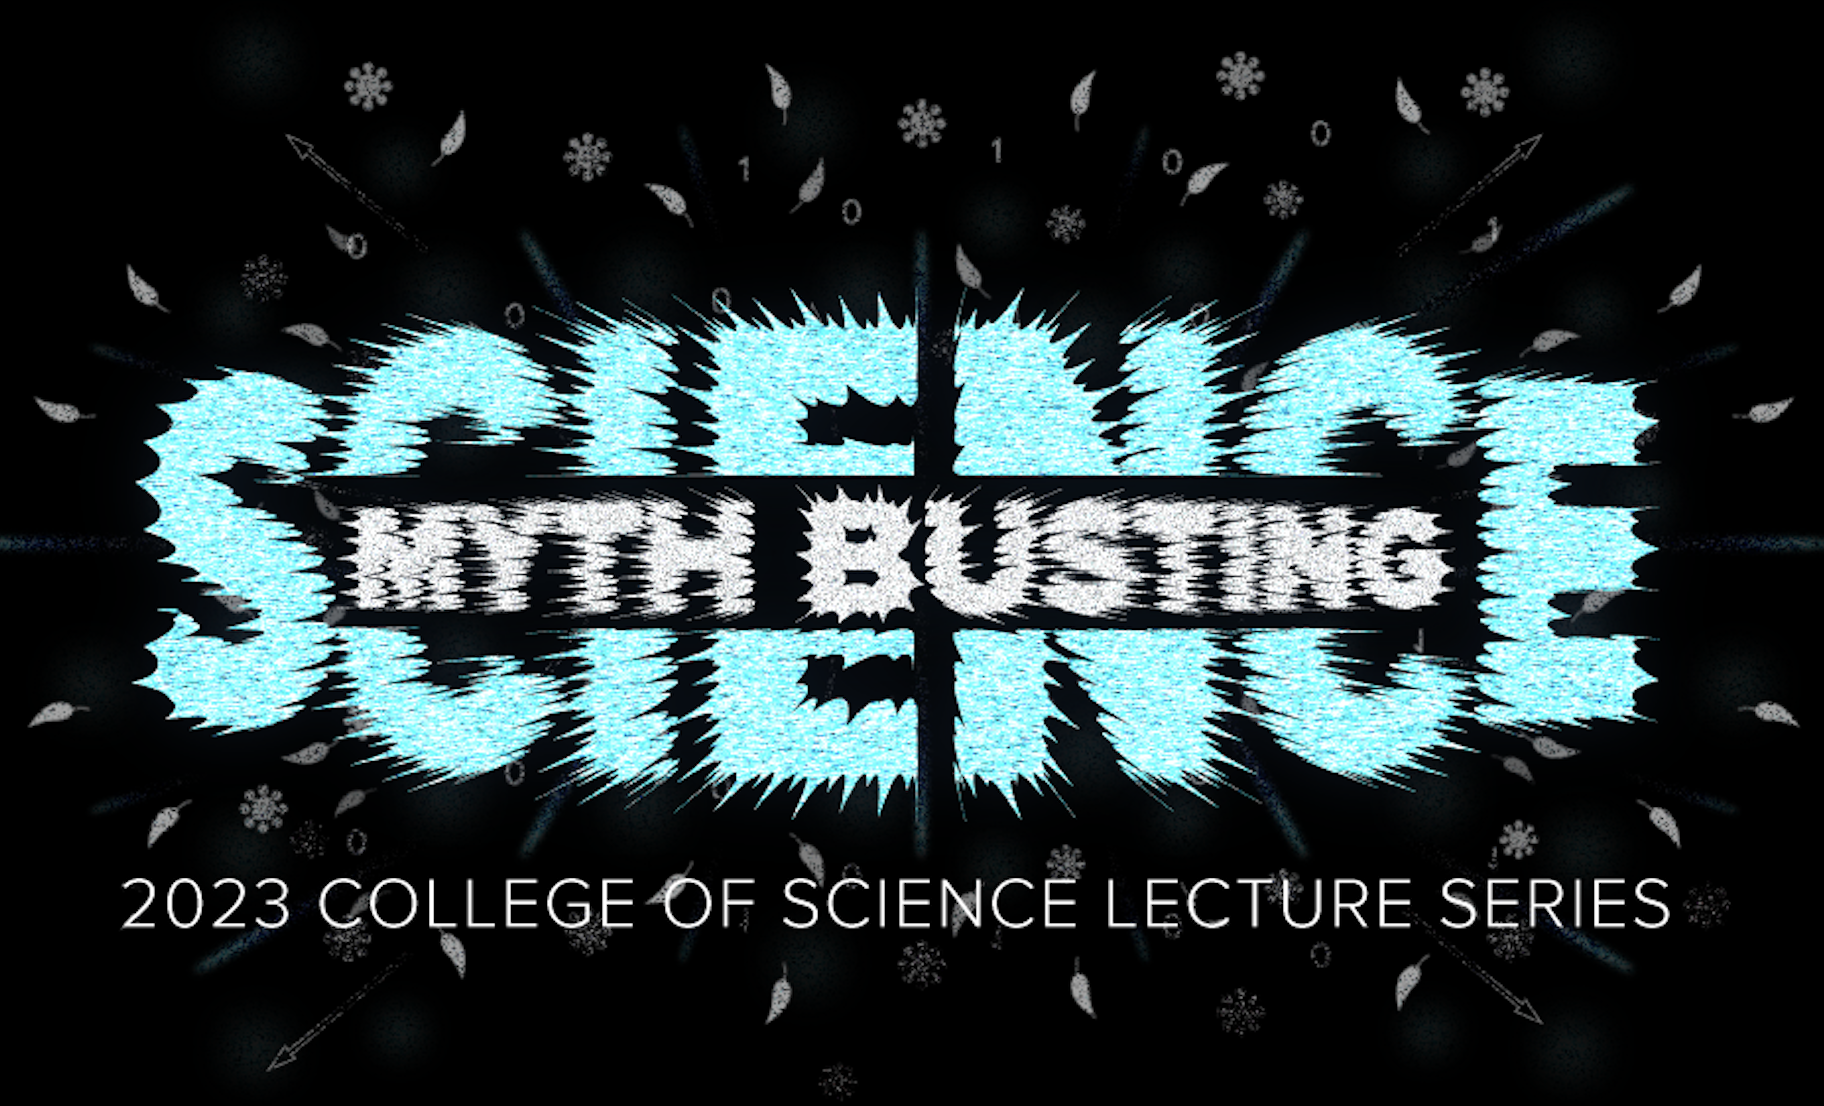 Myth Busting Science